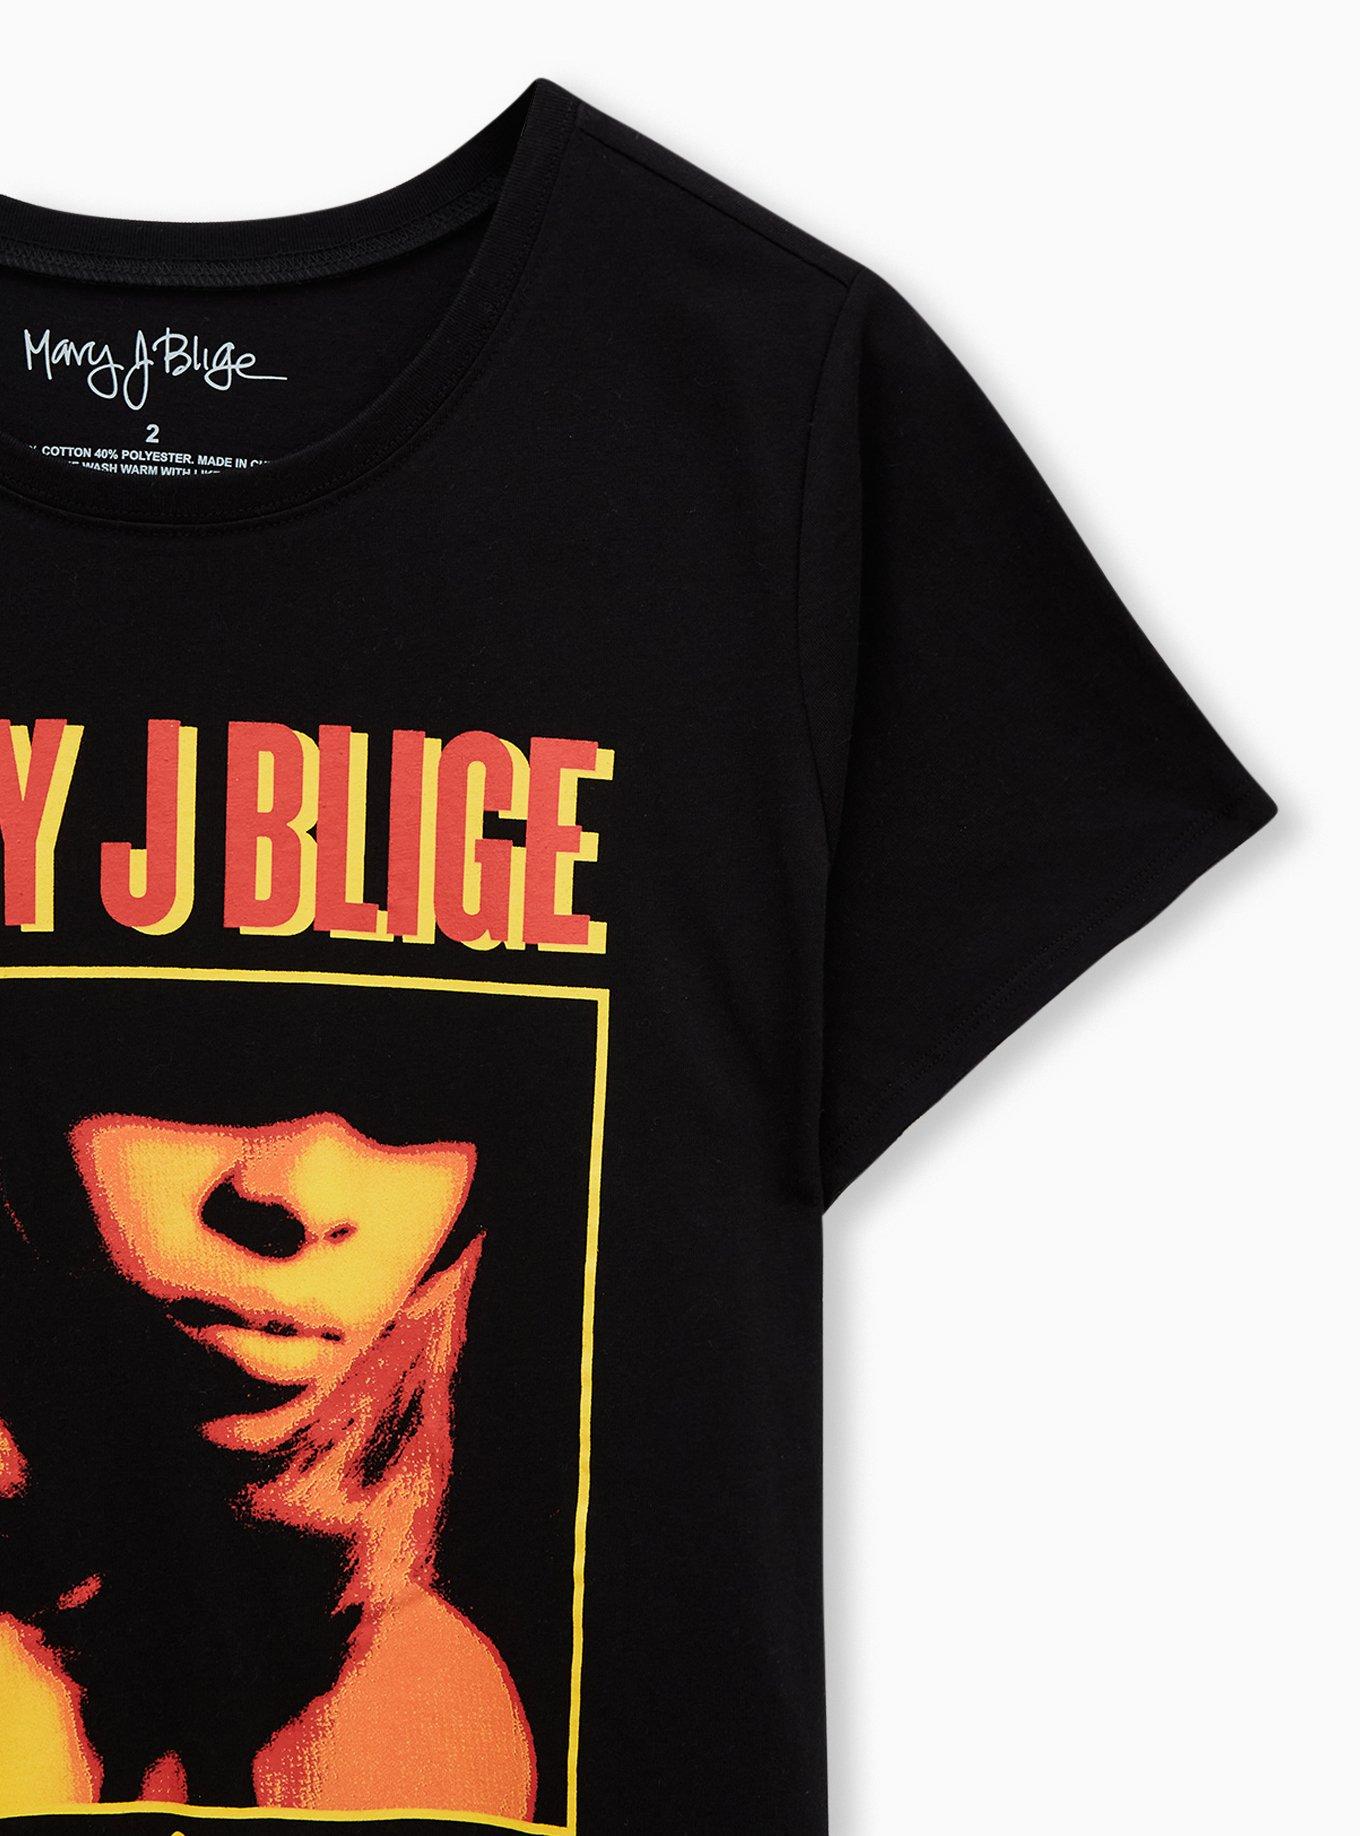 買い販売店 Mary J Blige Tee S size Black 黒 | artfive.co.jp